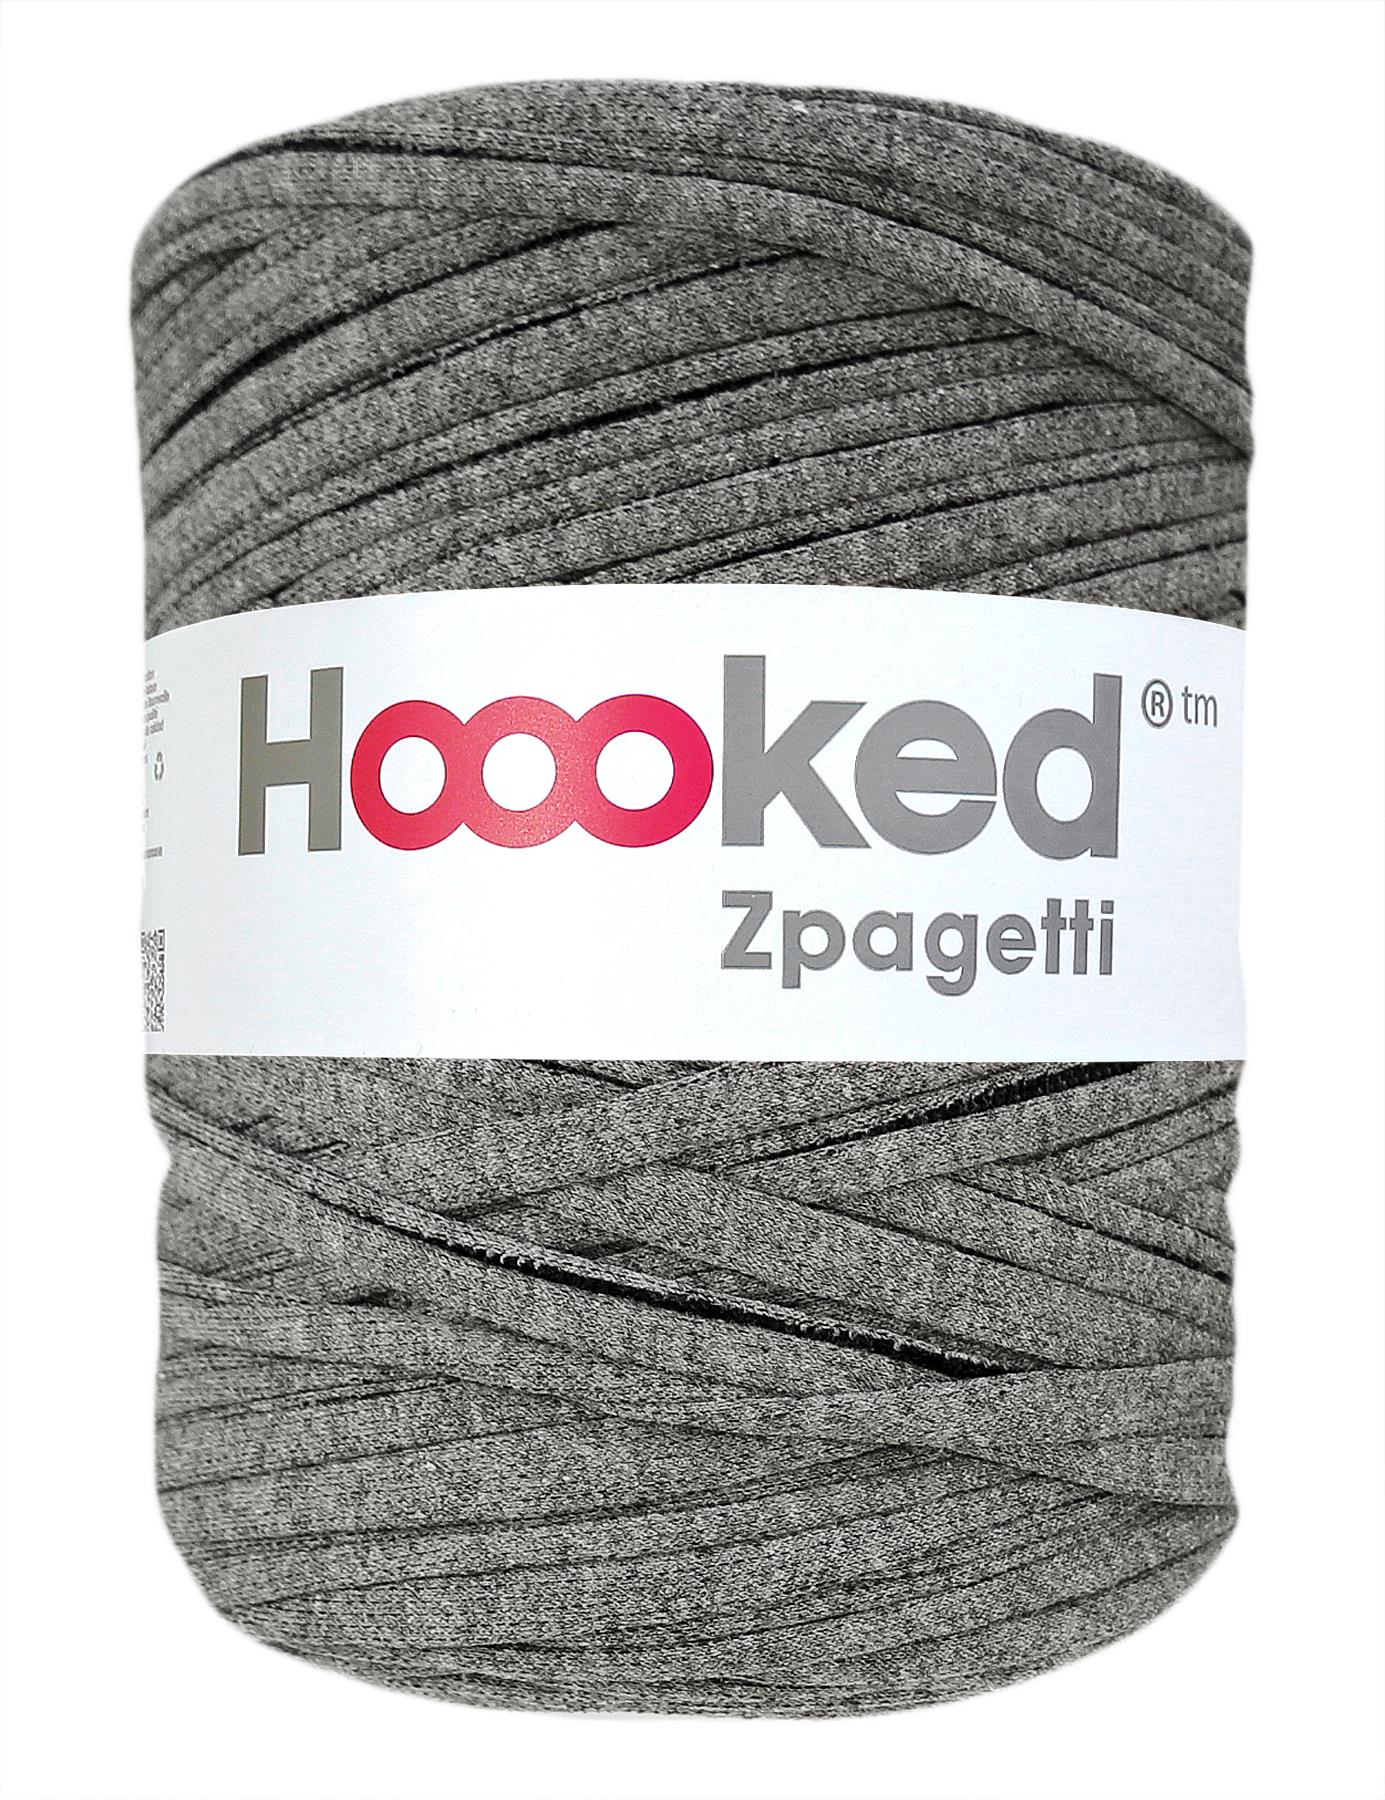 Iron grey t-shirt yarn by Hoooked Zpagetti (100-120m)